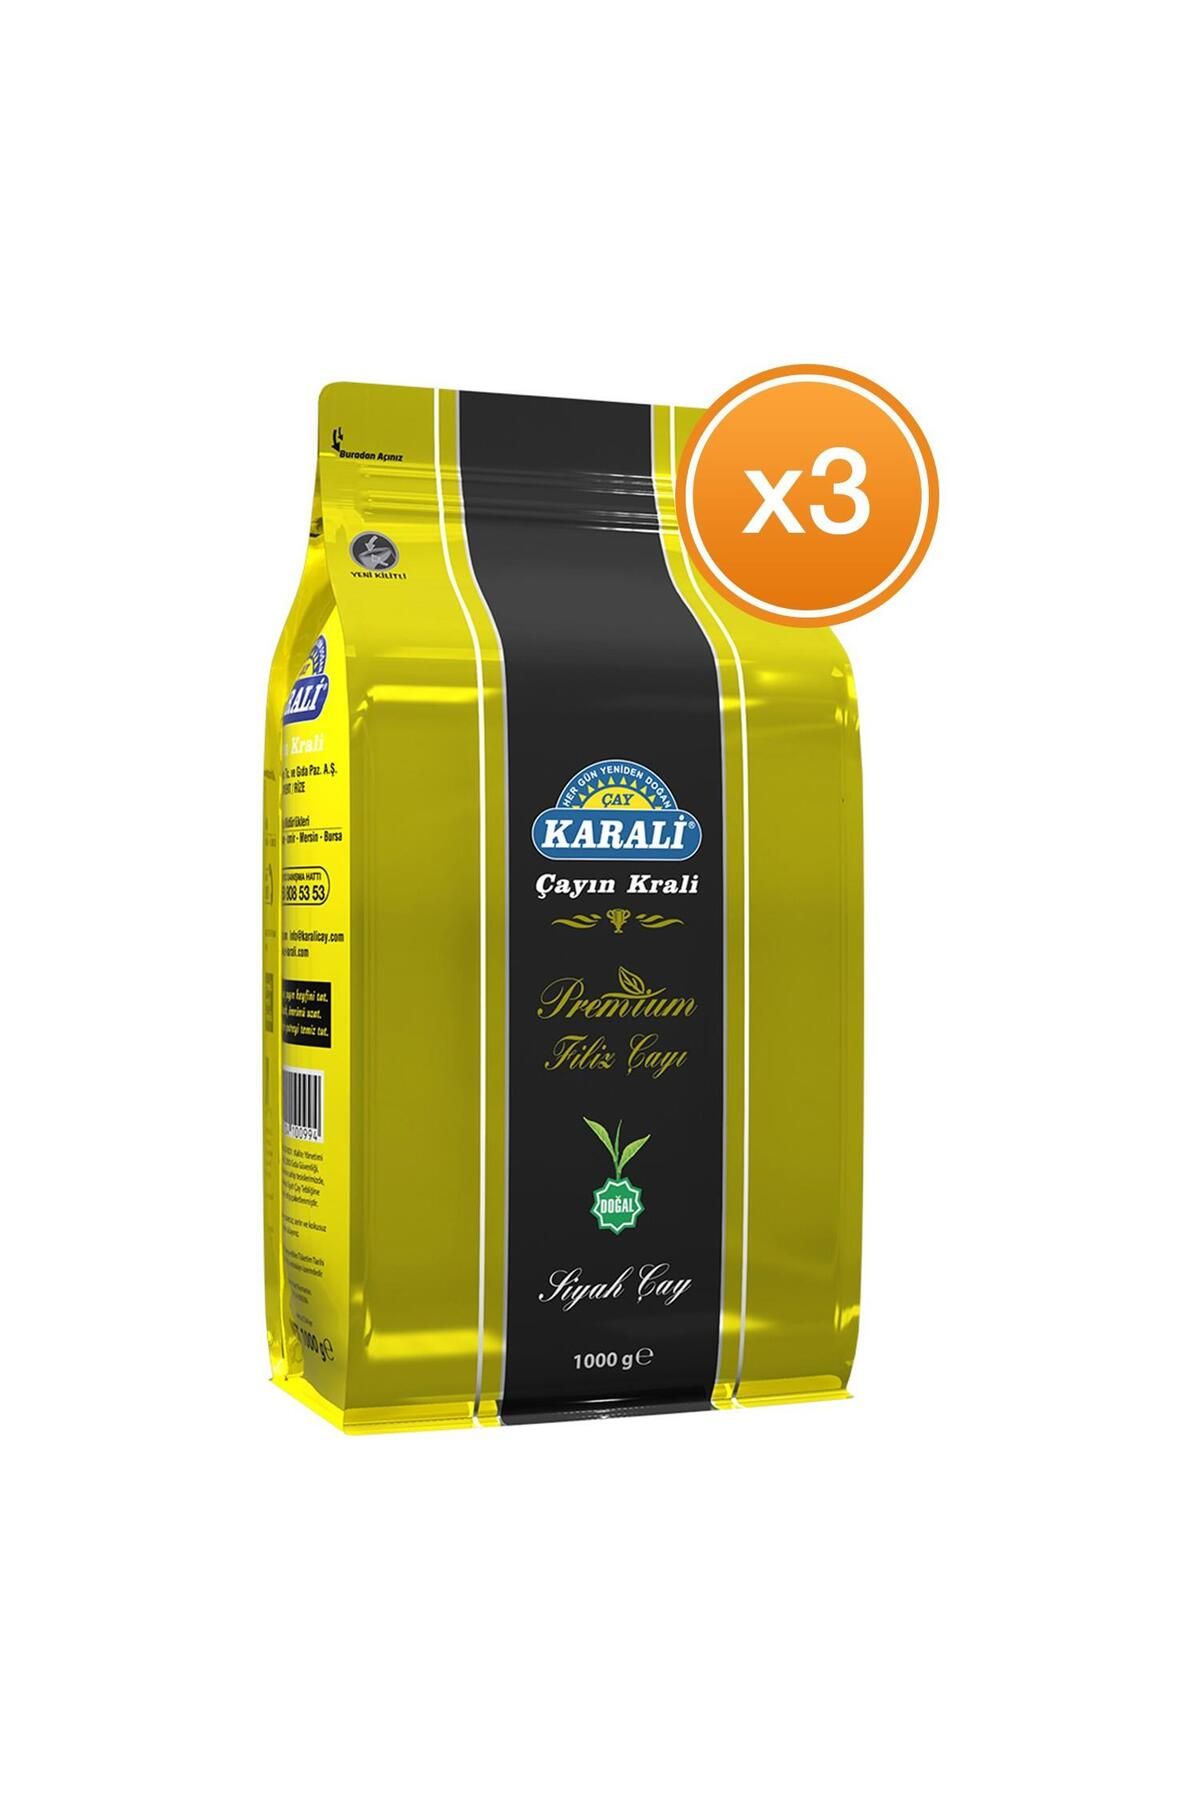 Karali Çay Karali Premium Filiz Çay 1000 gr X 3 Paket